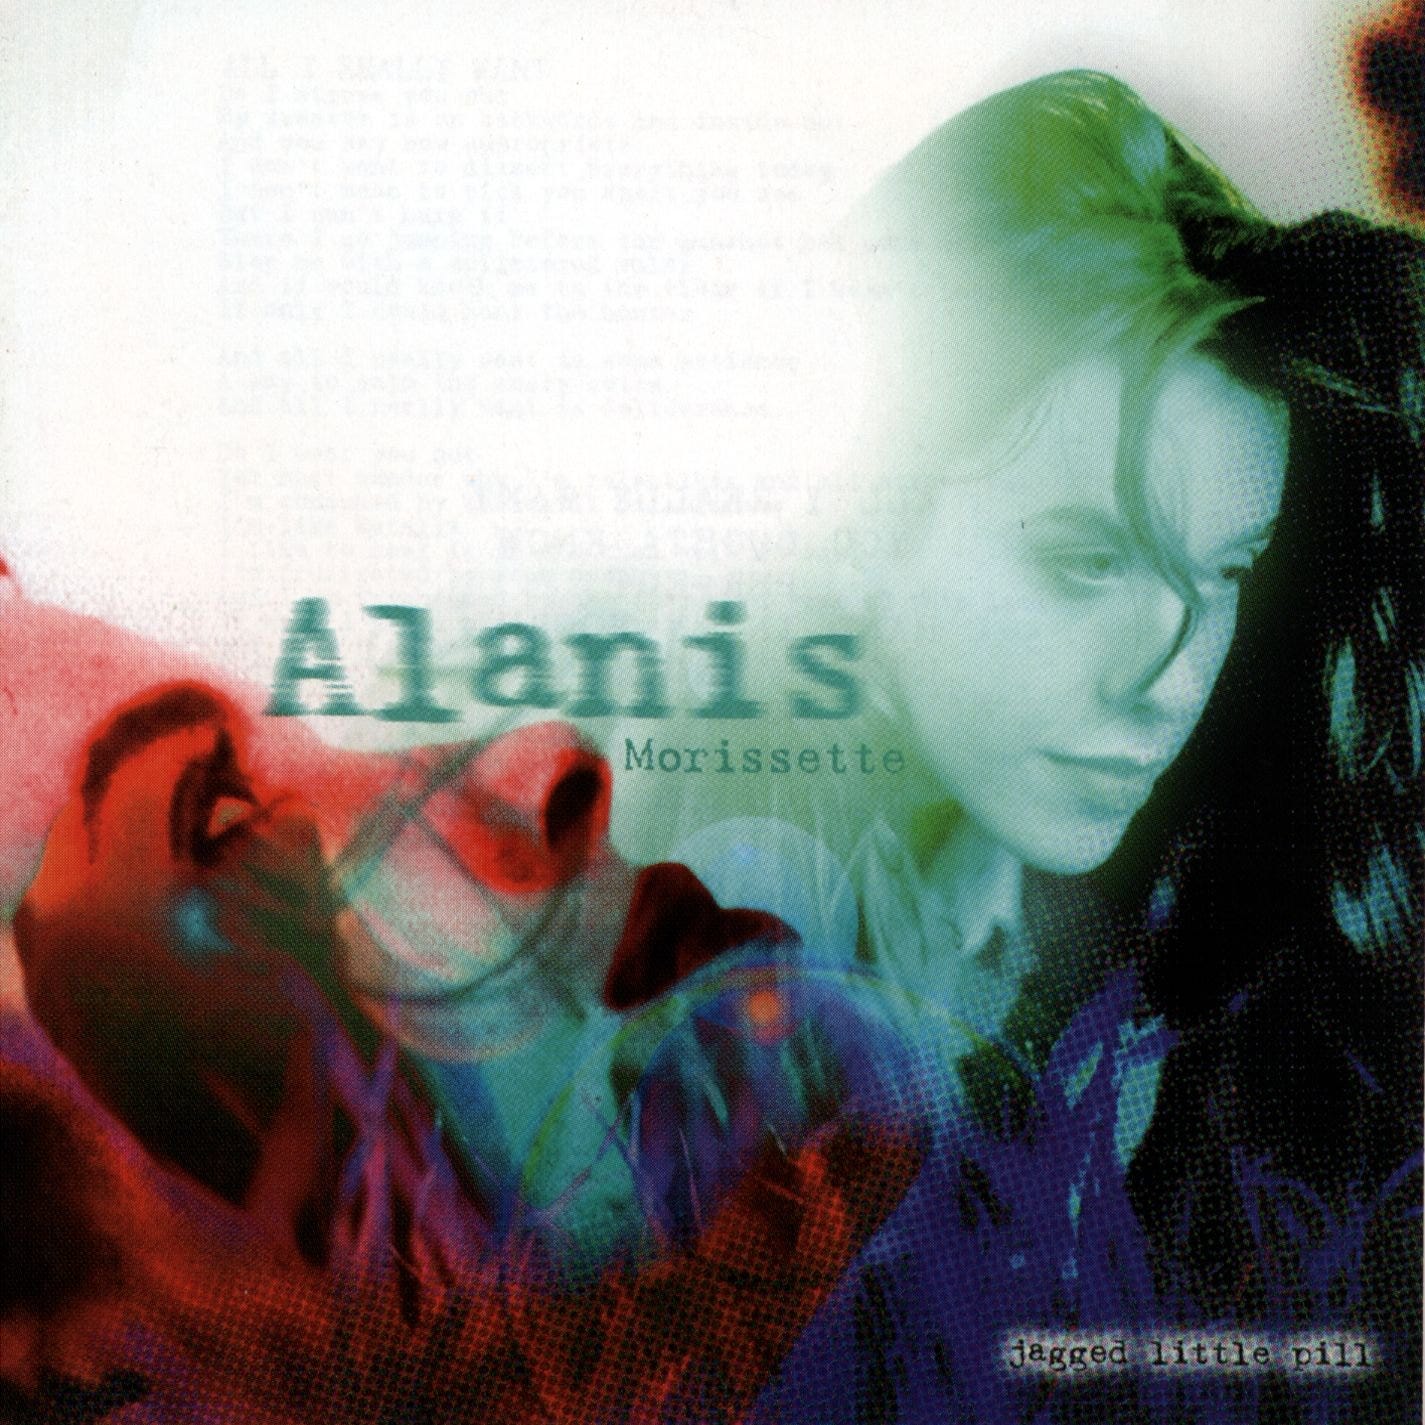 Alanis Morissette - Jagged Little Pill - Amazon.com Music